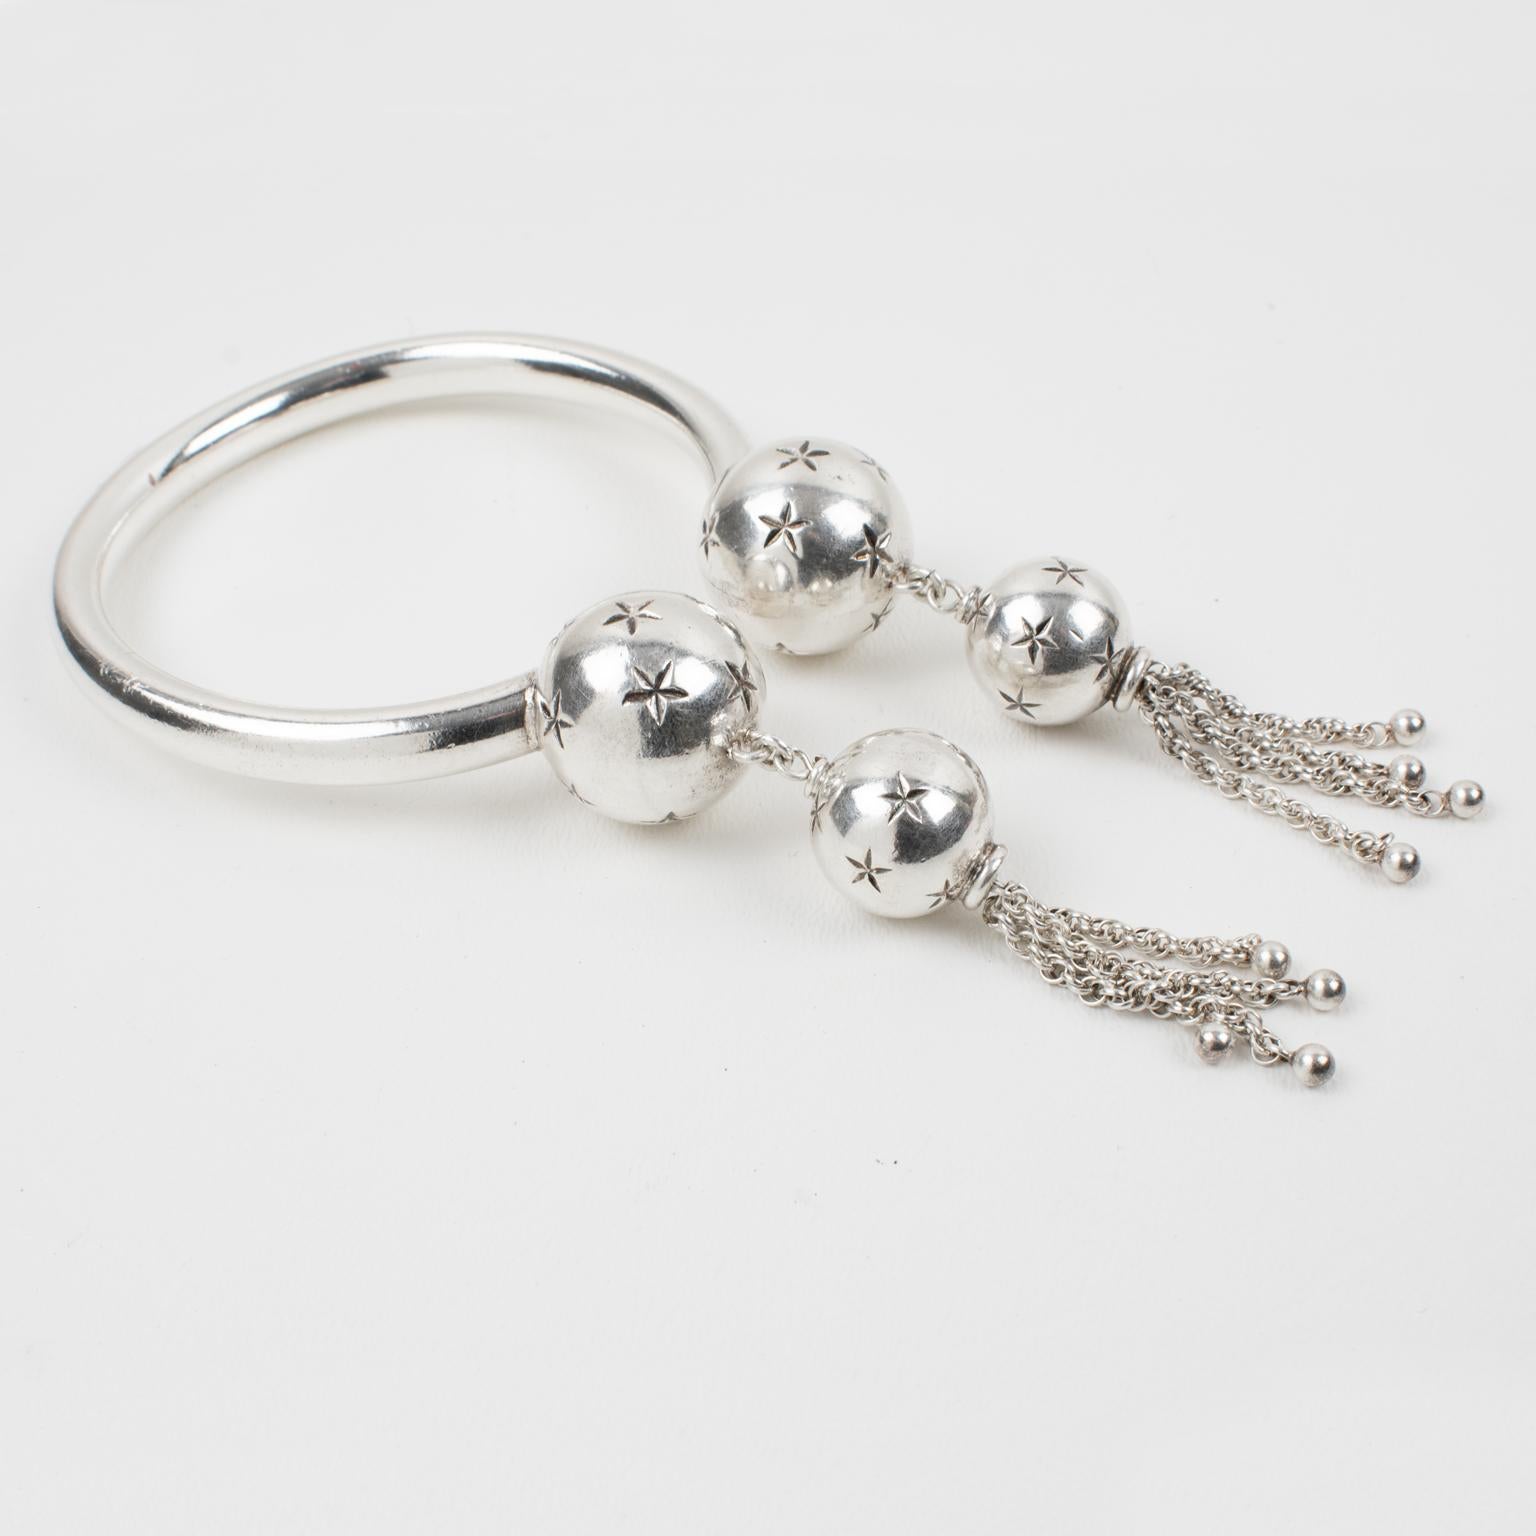 Modernist Emmanuelle Khanh Paris Silver Plate Cuff Bracelet with Dangle Charms For Sale